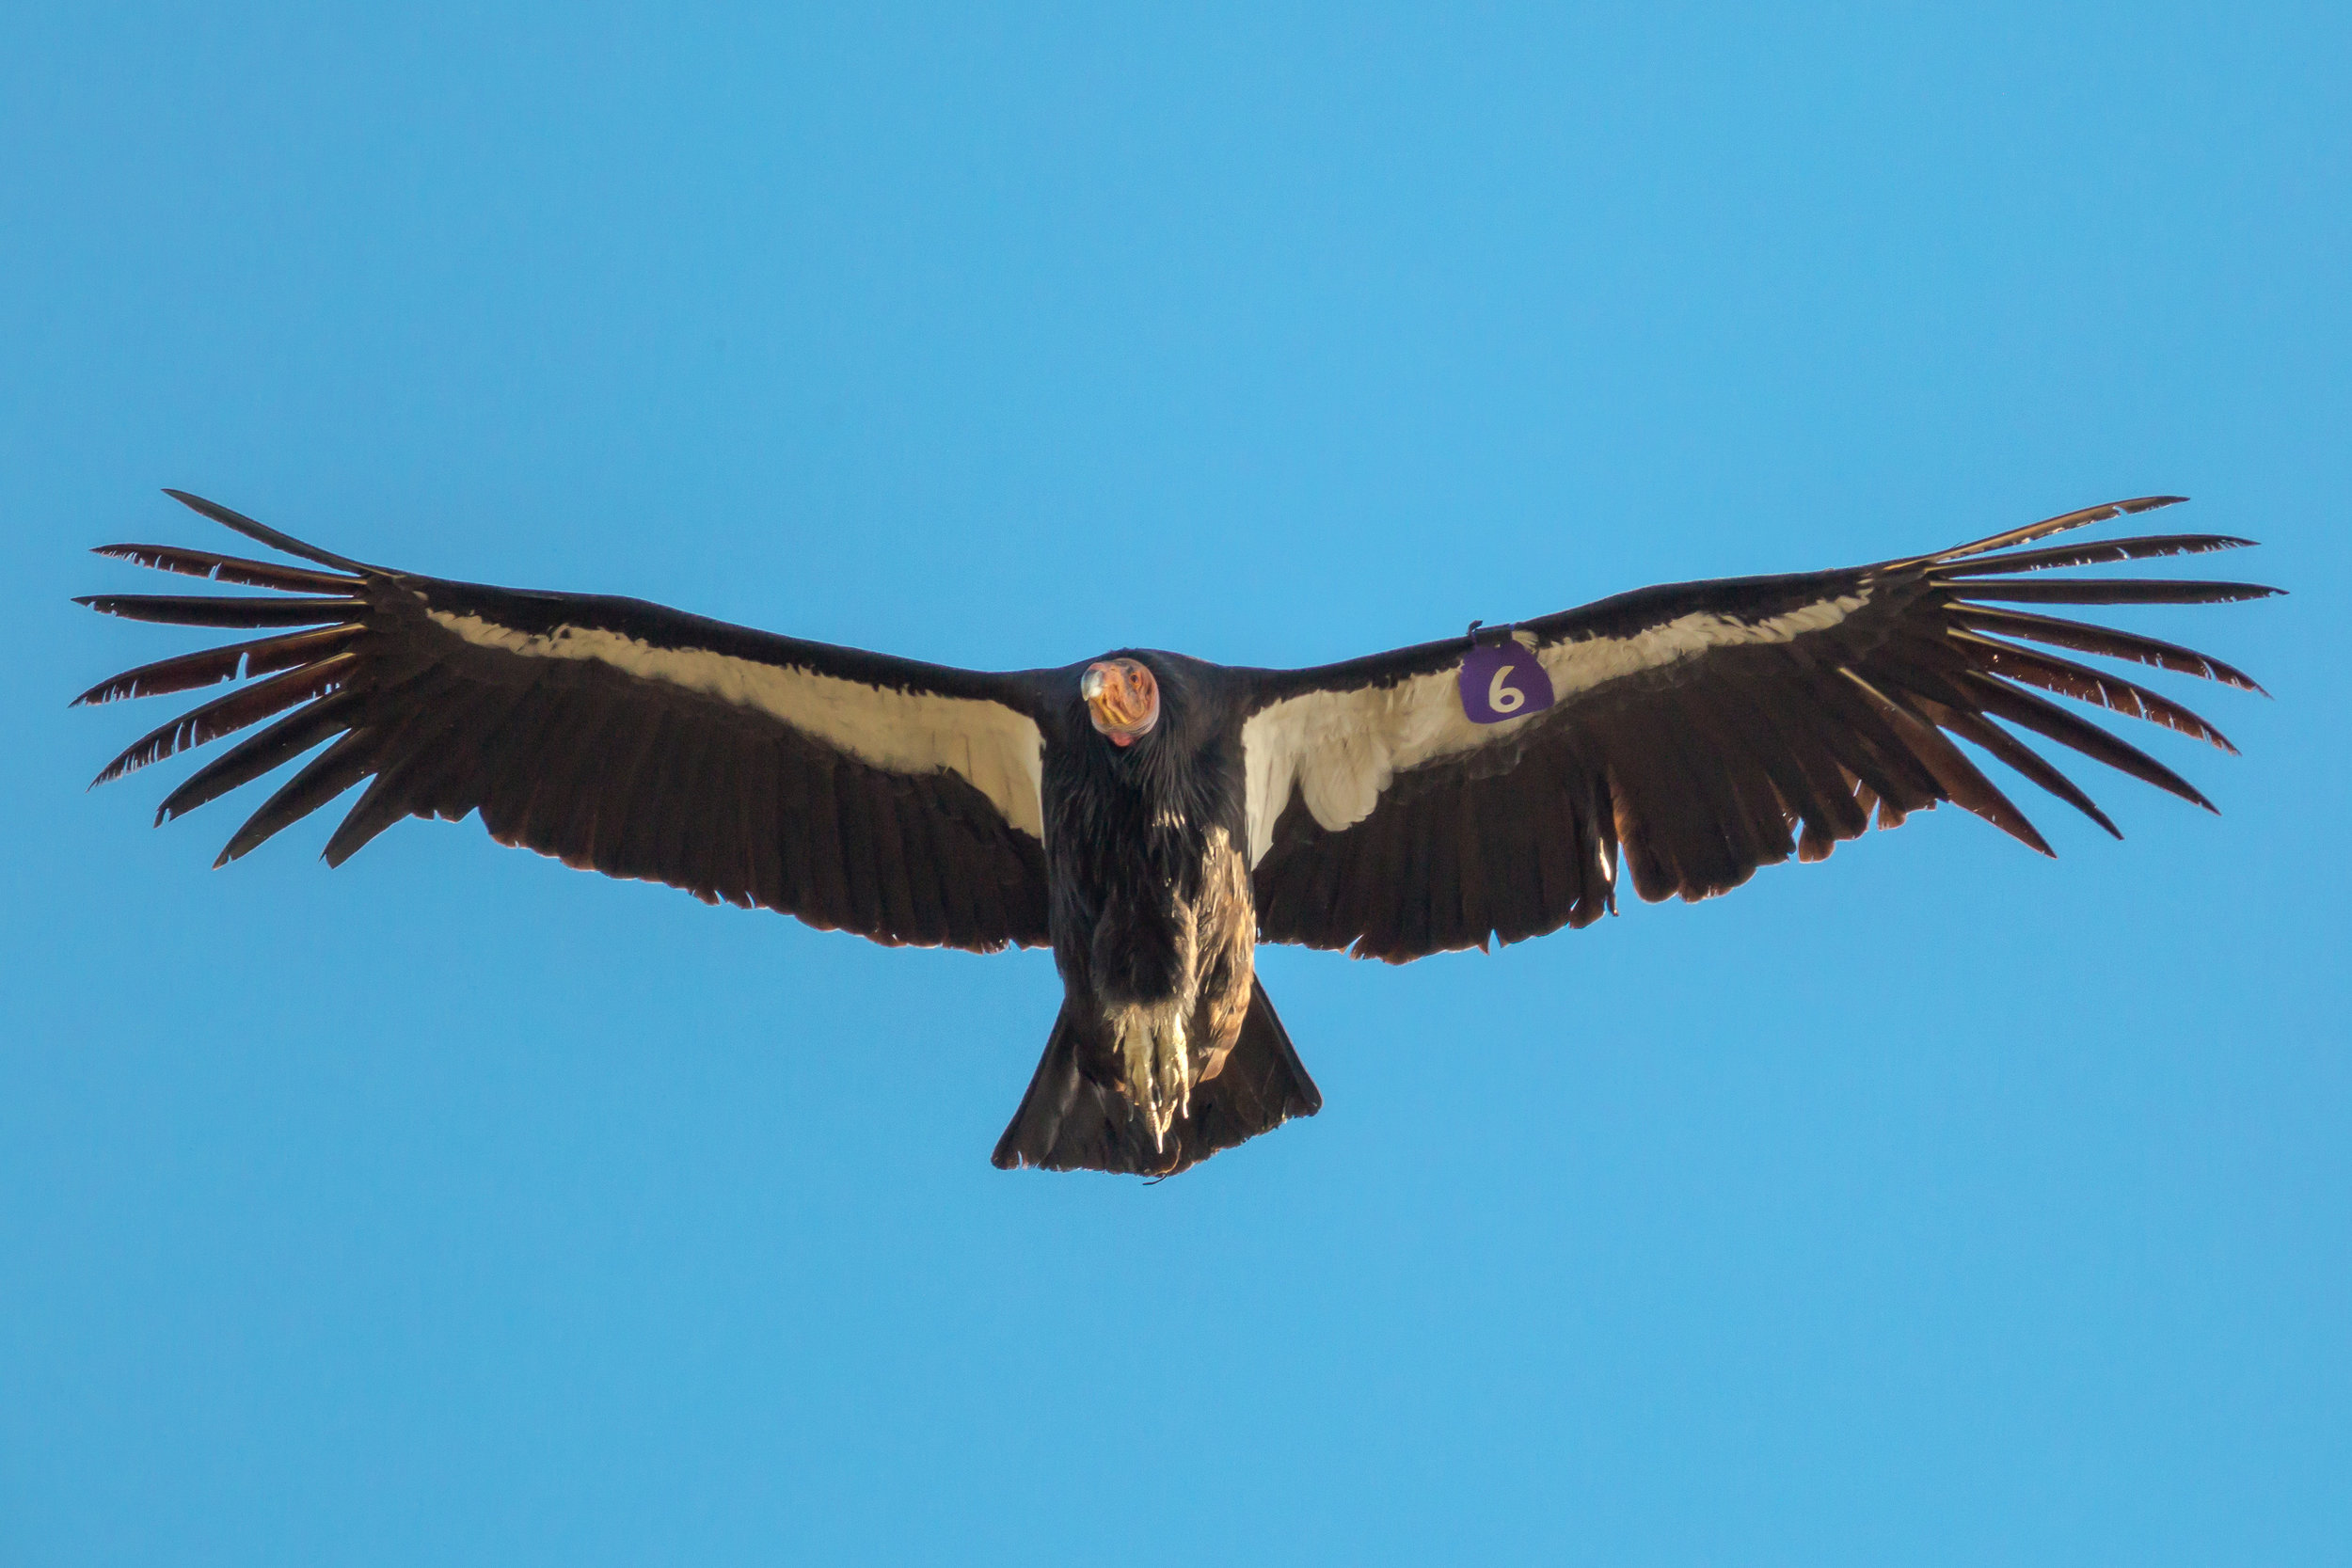 California Condor (Tag #6) at Pinnacles National Park. Several National Parks acts as habitat for the condor, including Zion, Grand Canyon, and Pinnacles.